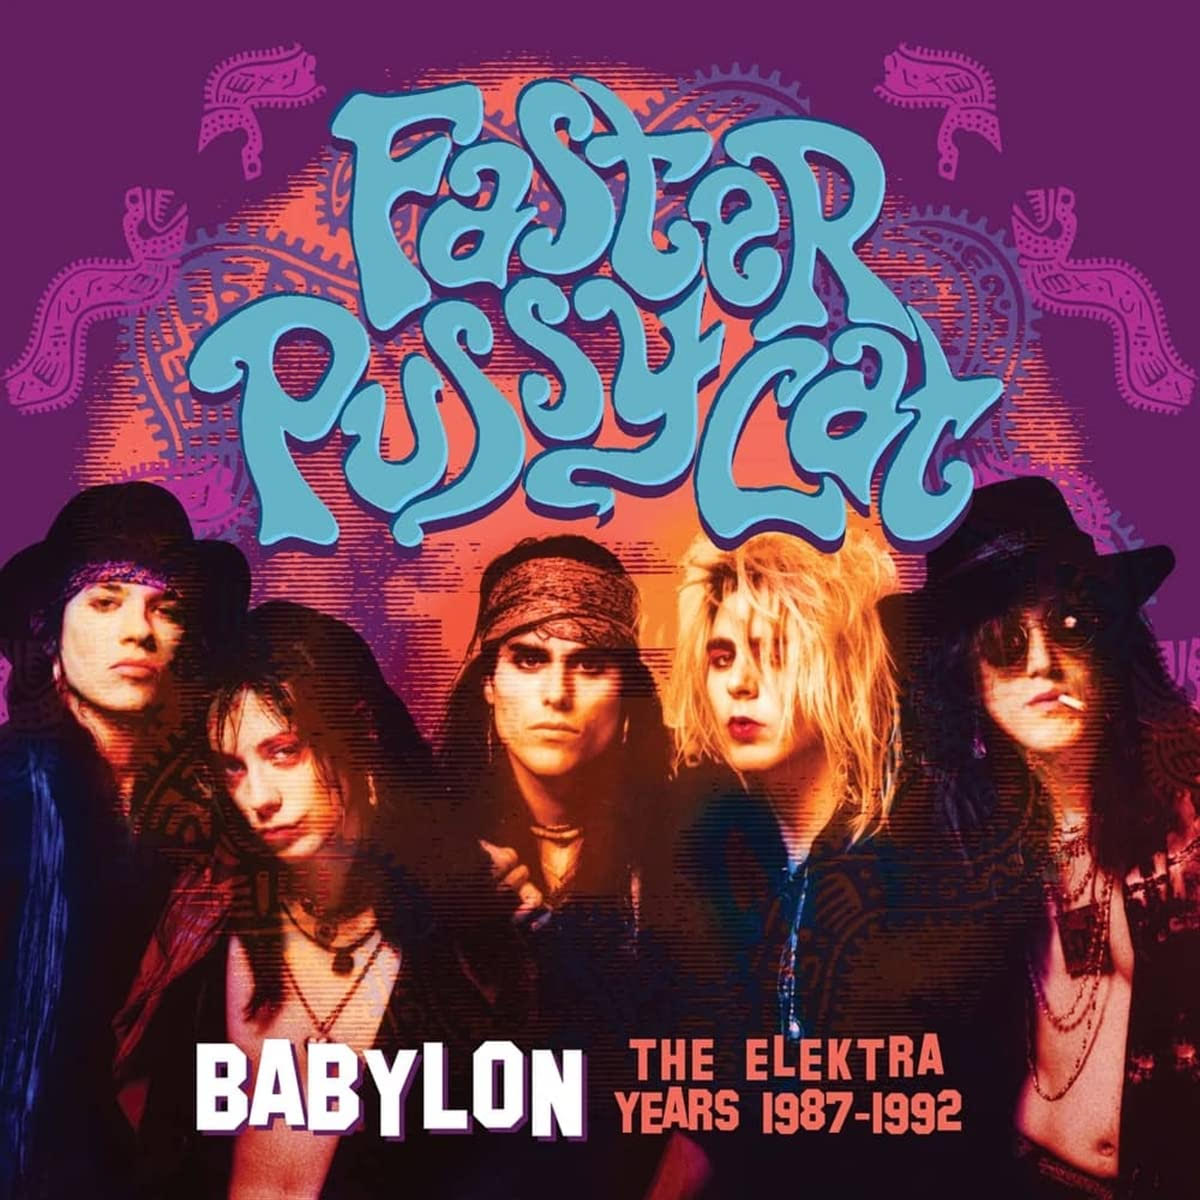 Faster Pussycat - Babylon – The Elektra Years 1987-1992 (4 CD Box Set - Imported)